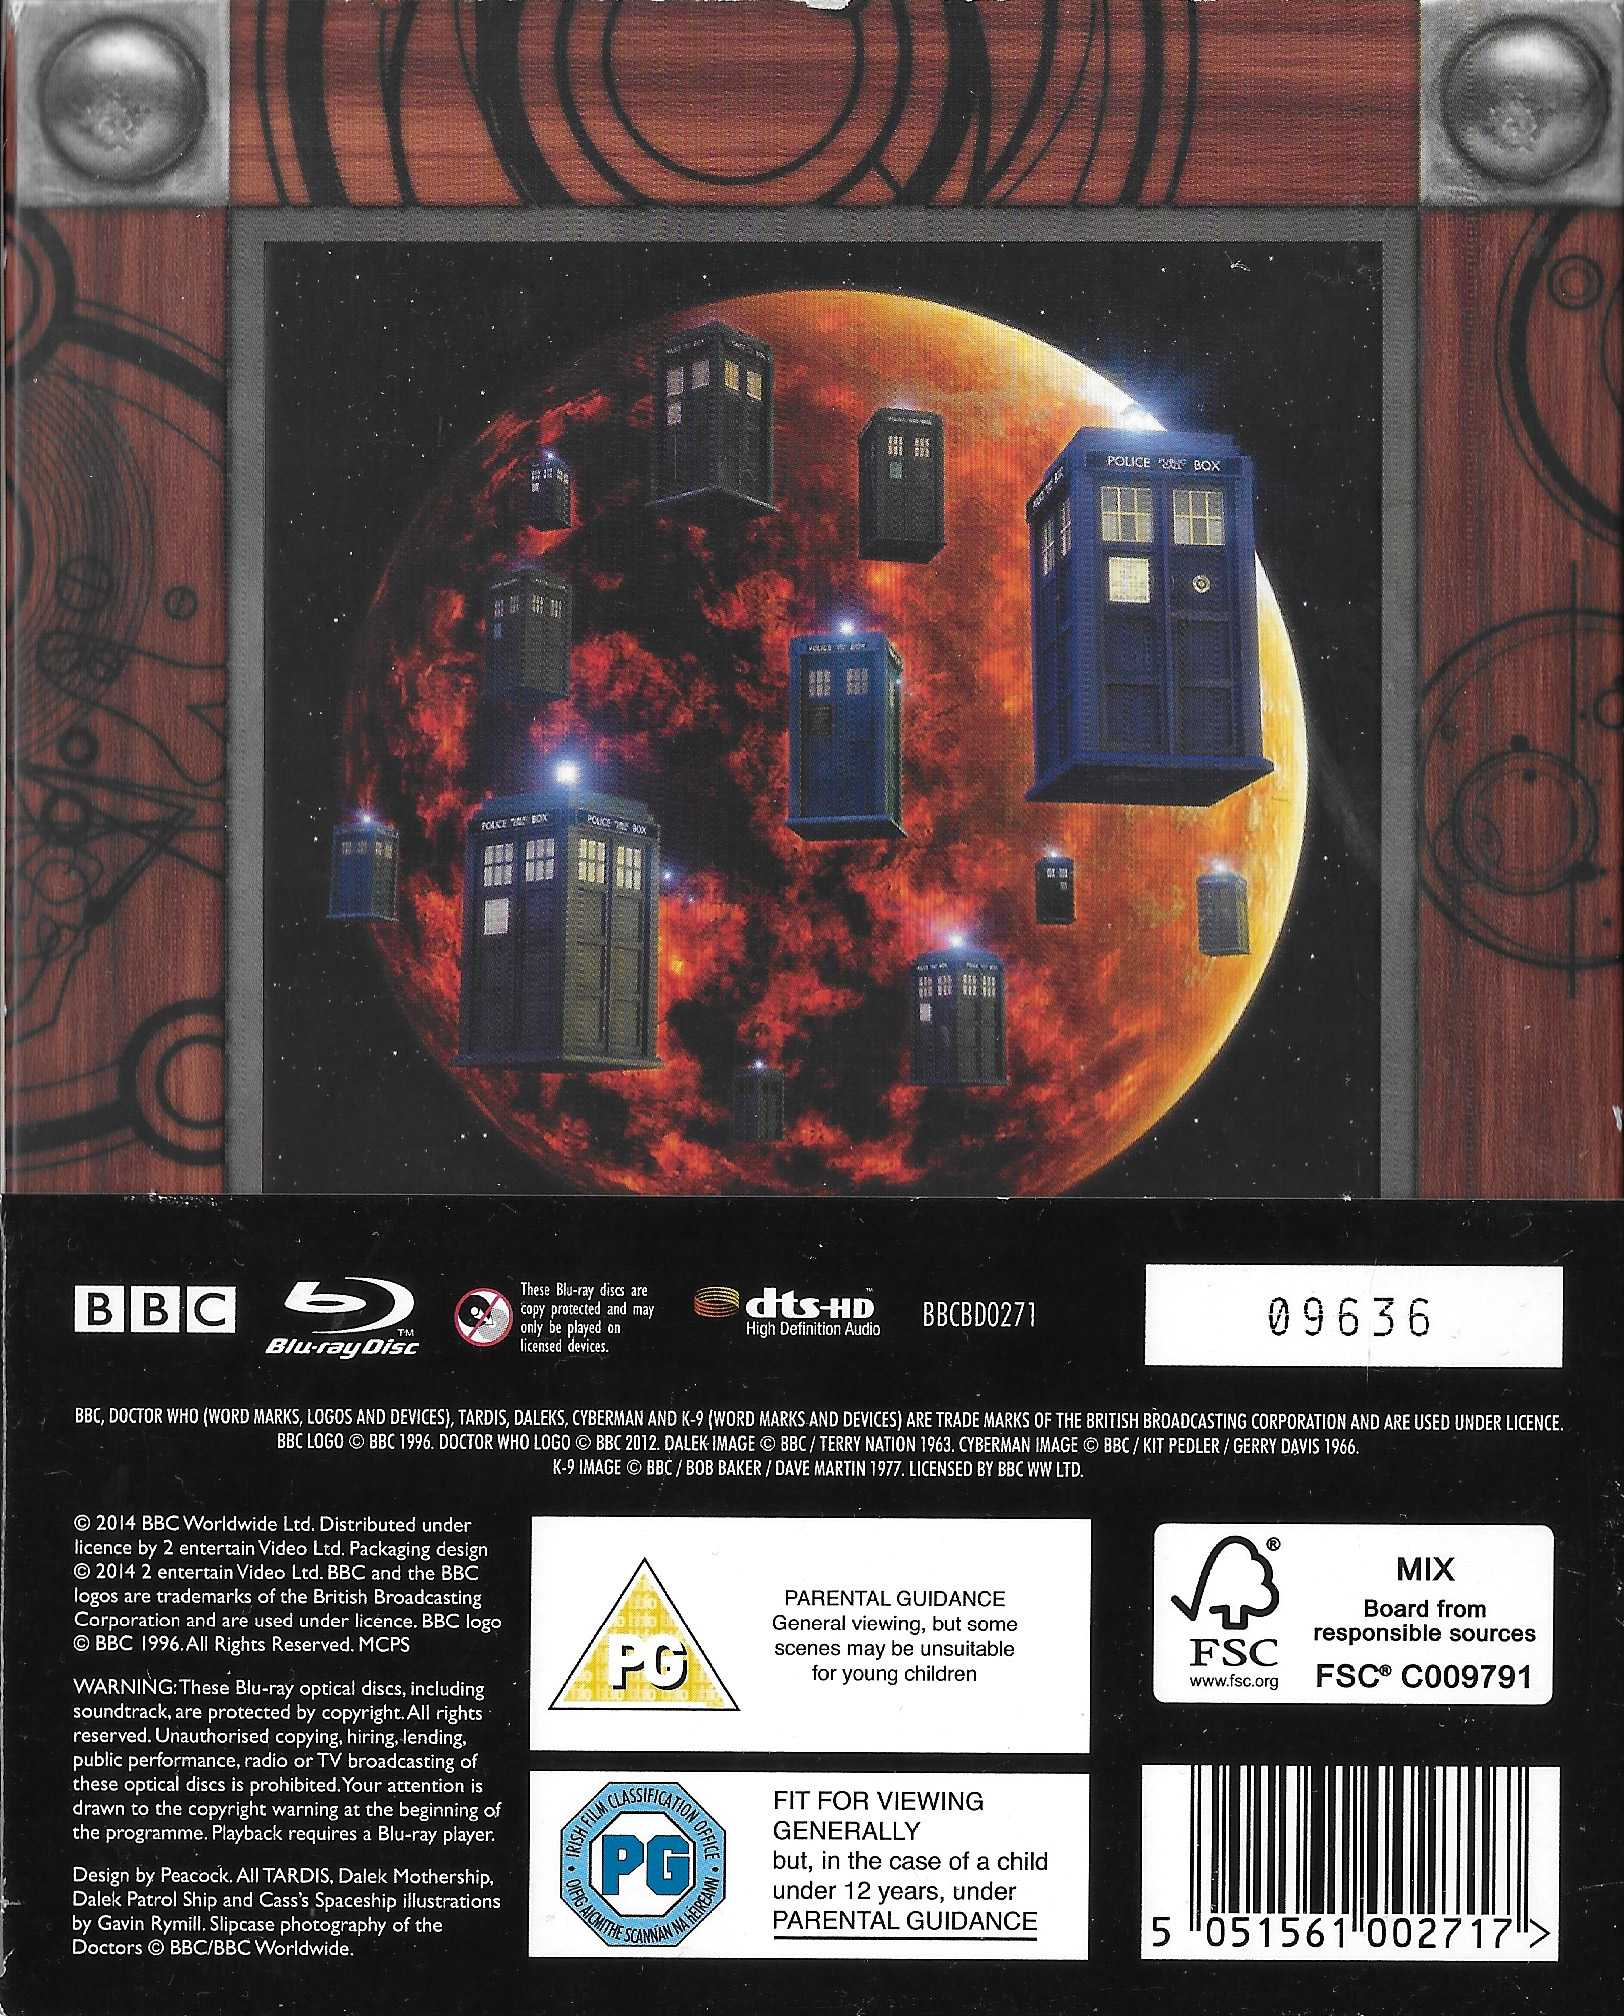 Back cover of BBCBD 0271